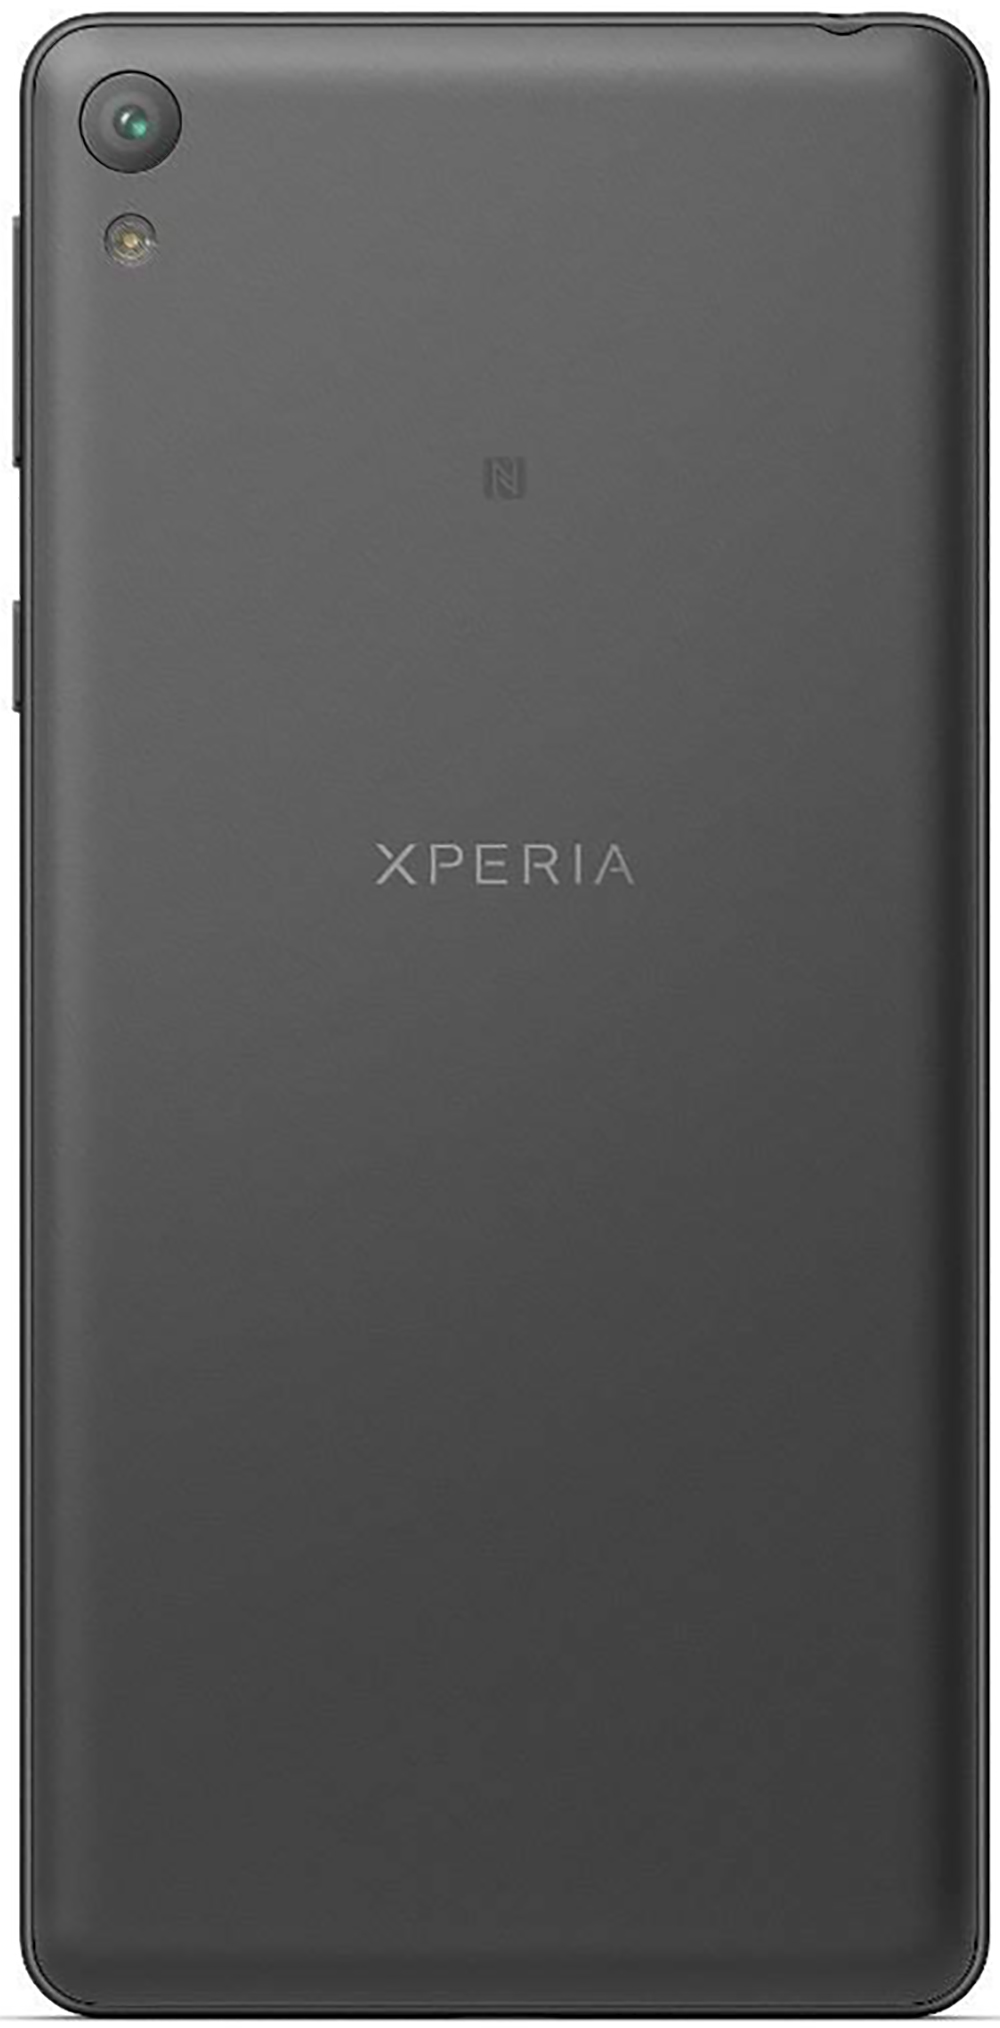 Sony Xperia E5 F3313 16GB Unlocked GSM 4G LTE Phone w/ 13MP Camera - Black - image 3 of 4